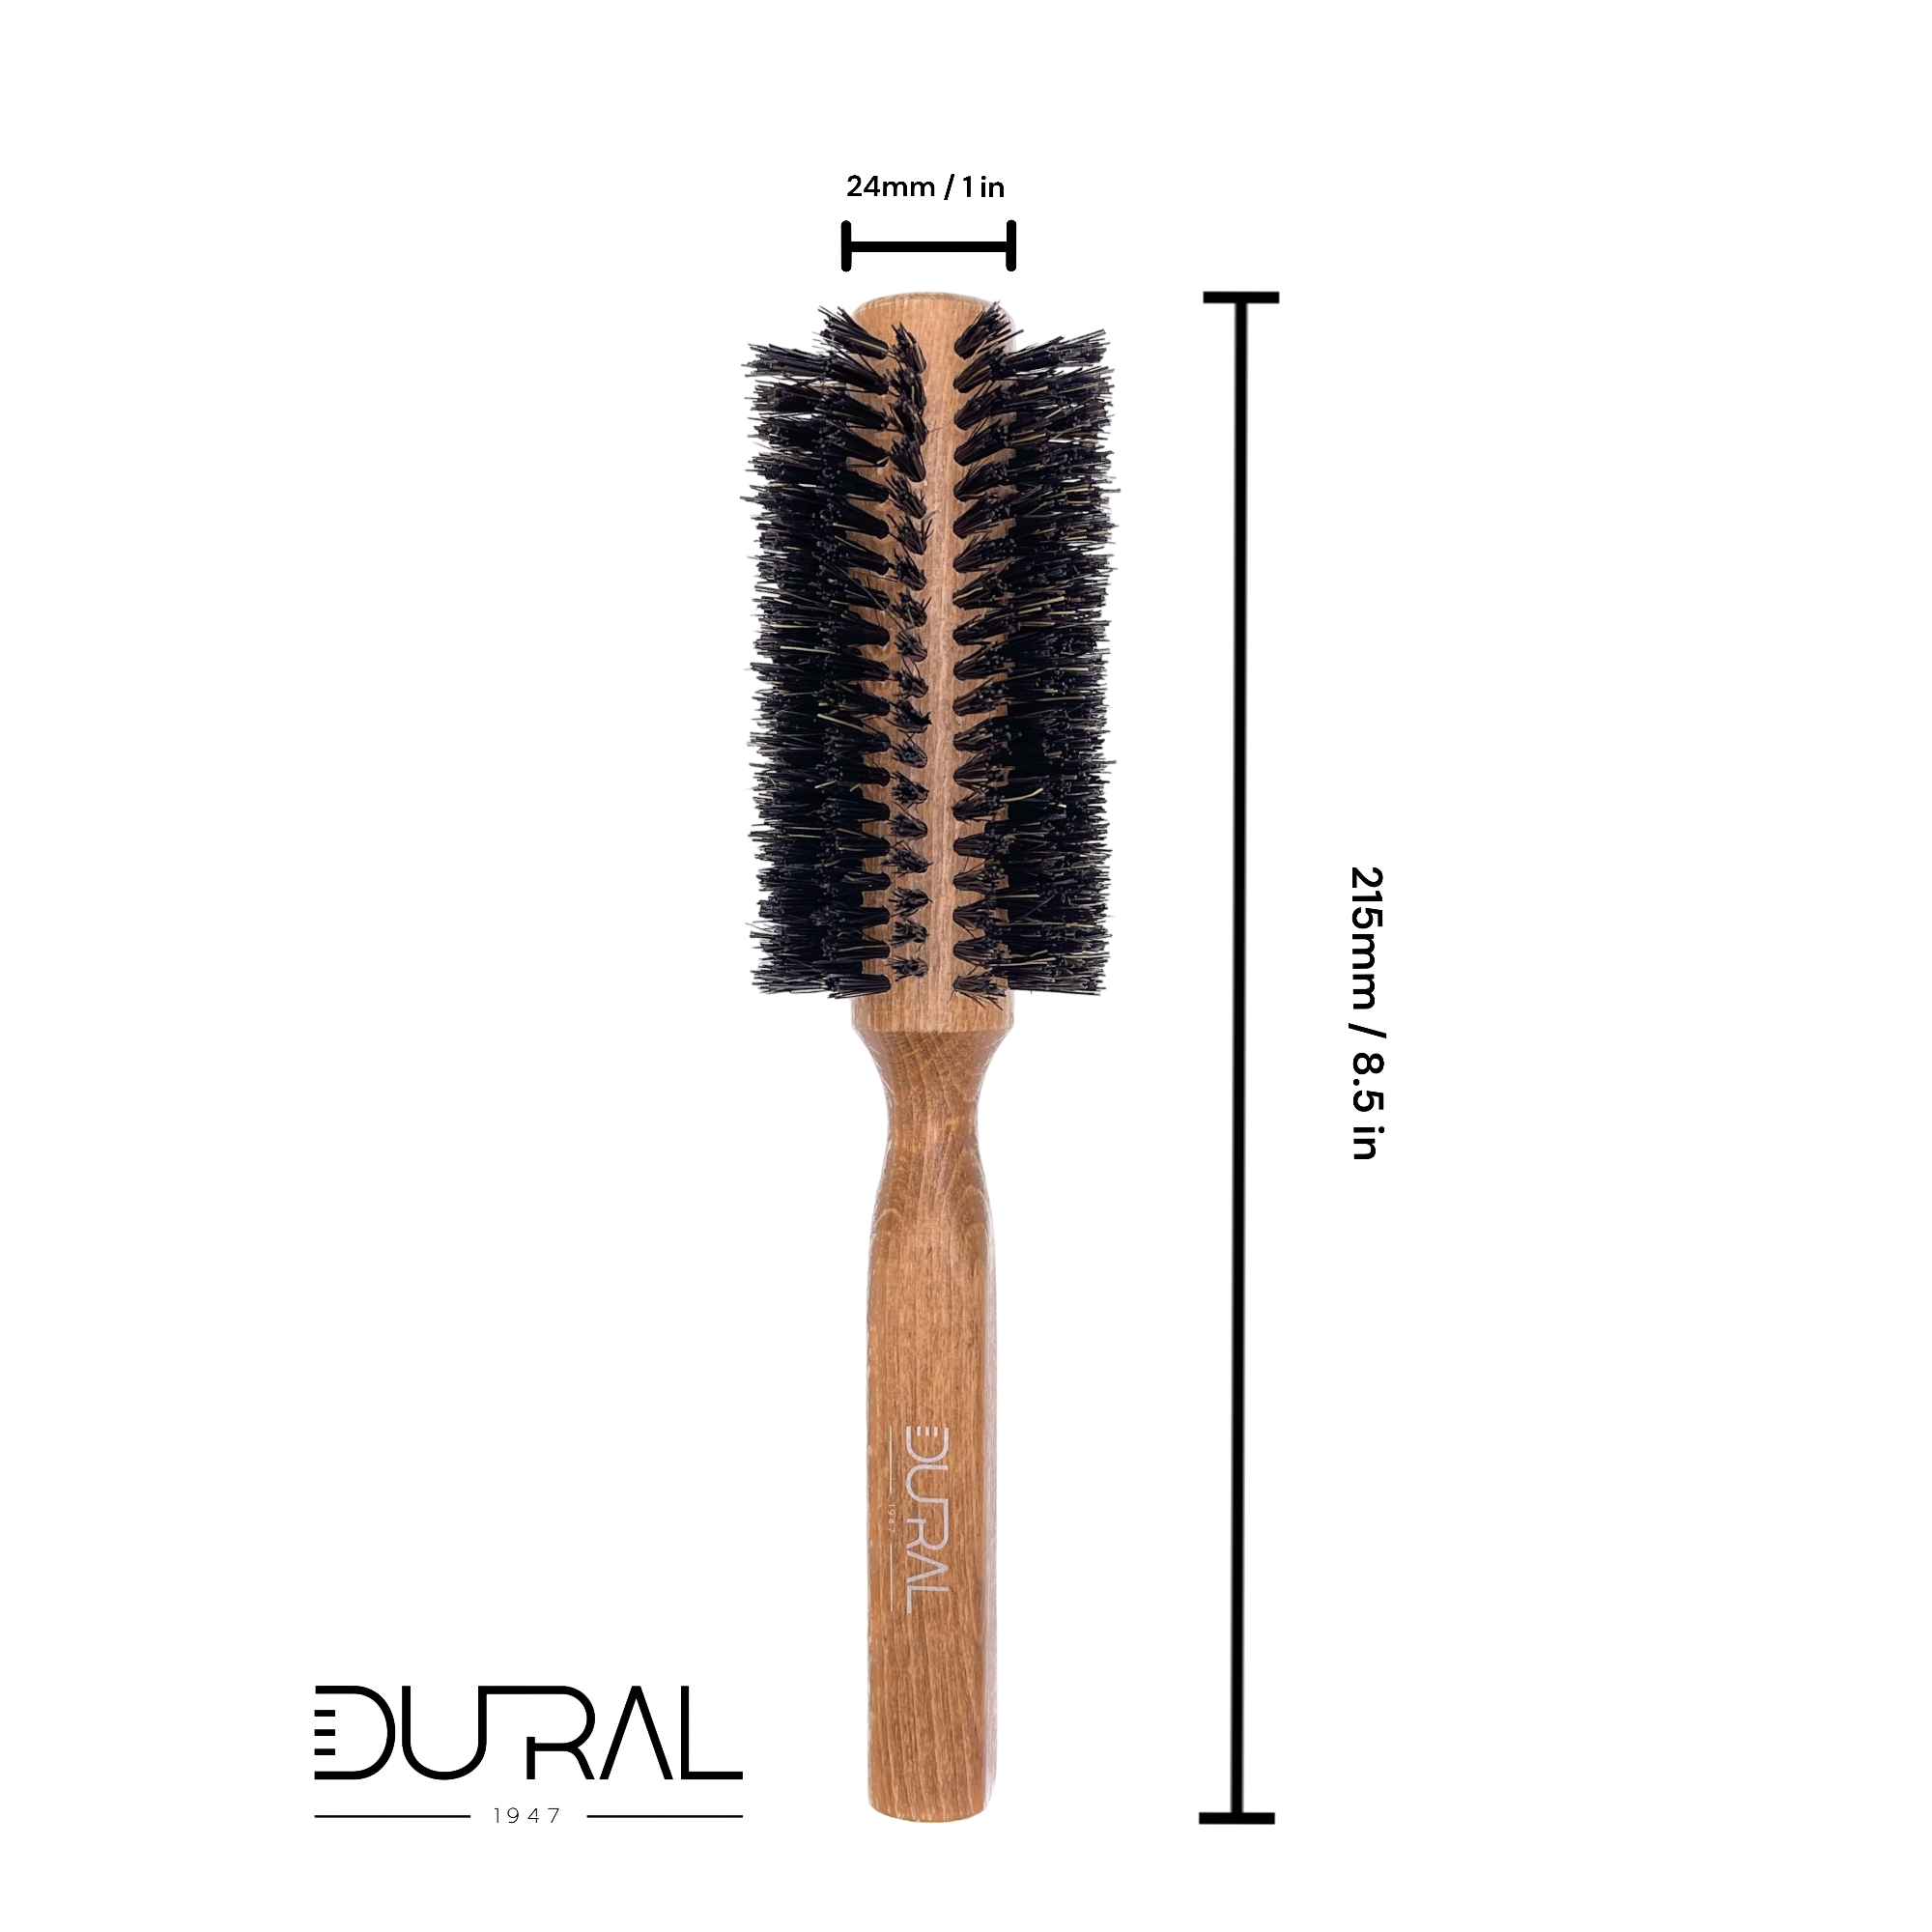 Dural RoundStyler Hair Brush 14 Rows Wood Pure Wild Boar Bristles